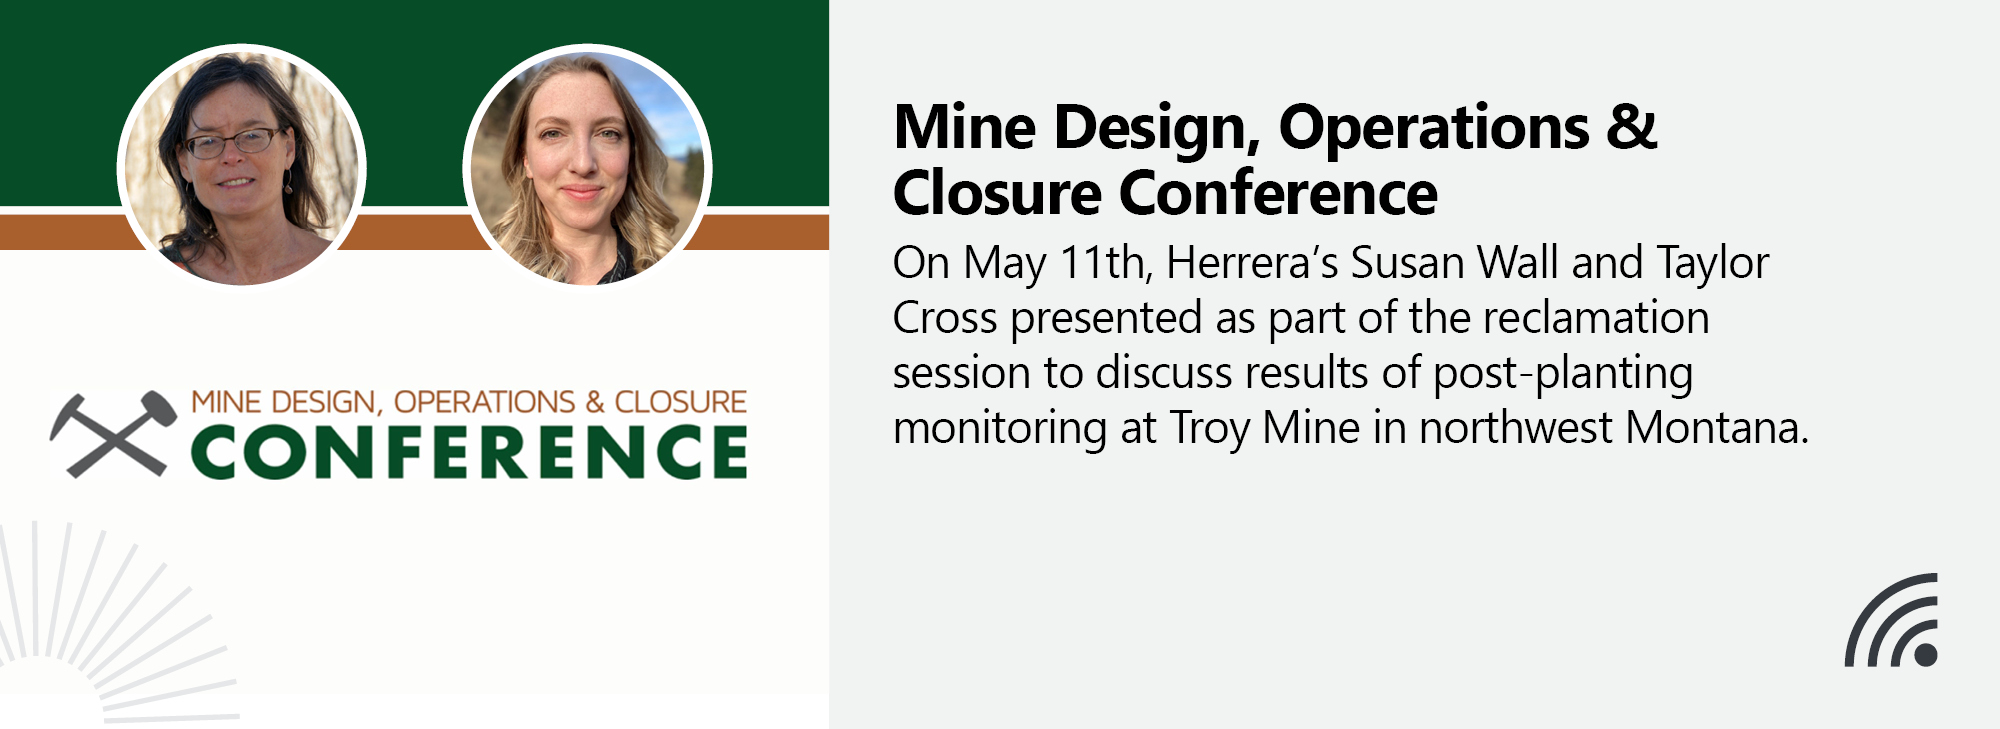 Q2-mine-design-operations-conference